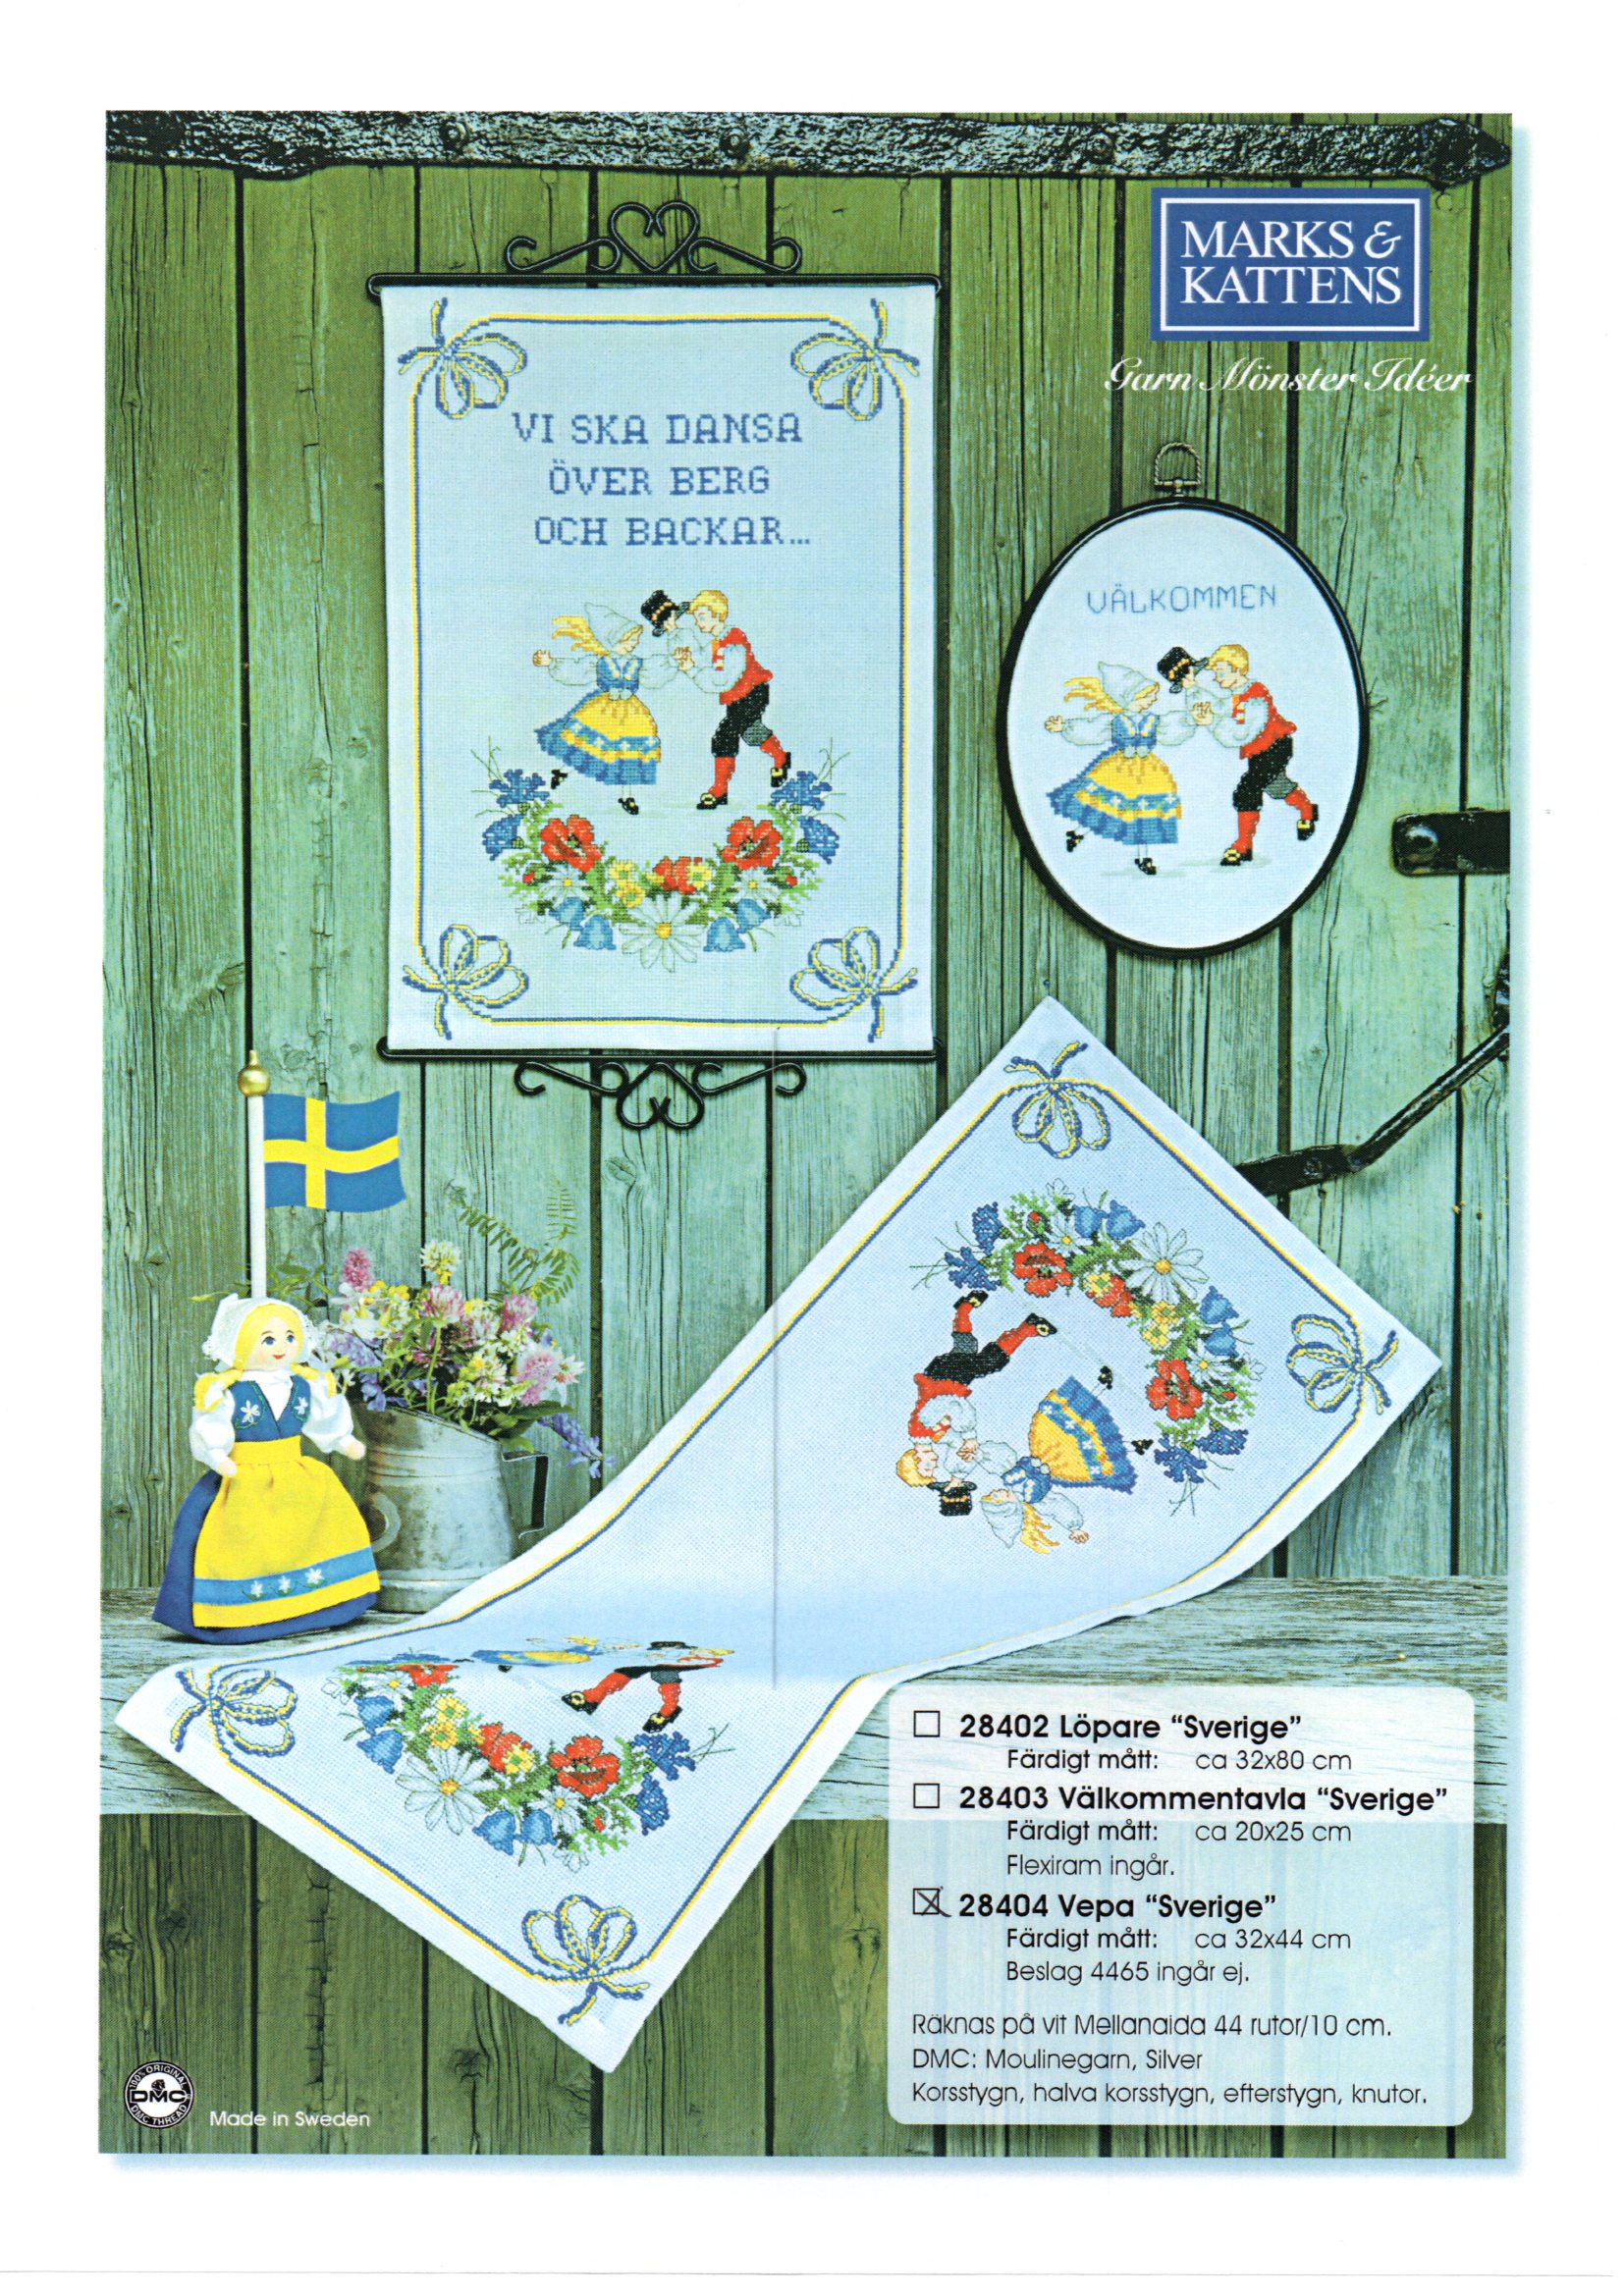 kanal dynasti jøde Marks & Kattens, Vepa, Sverige ca 32 x 44 cm 28404 - Garntorget